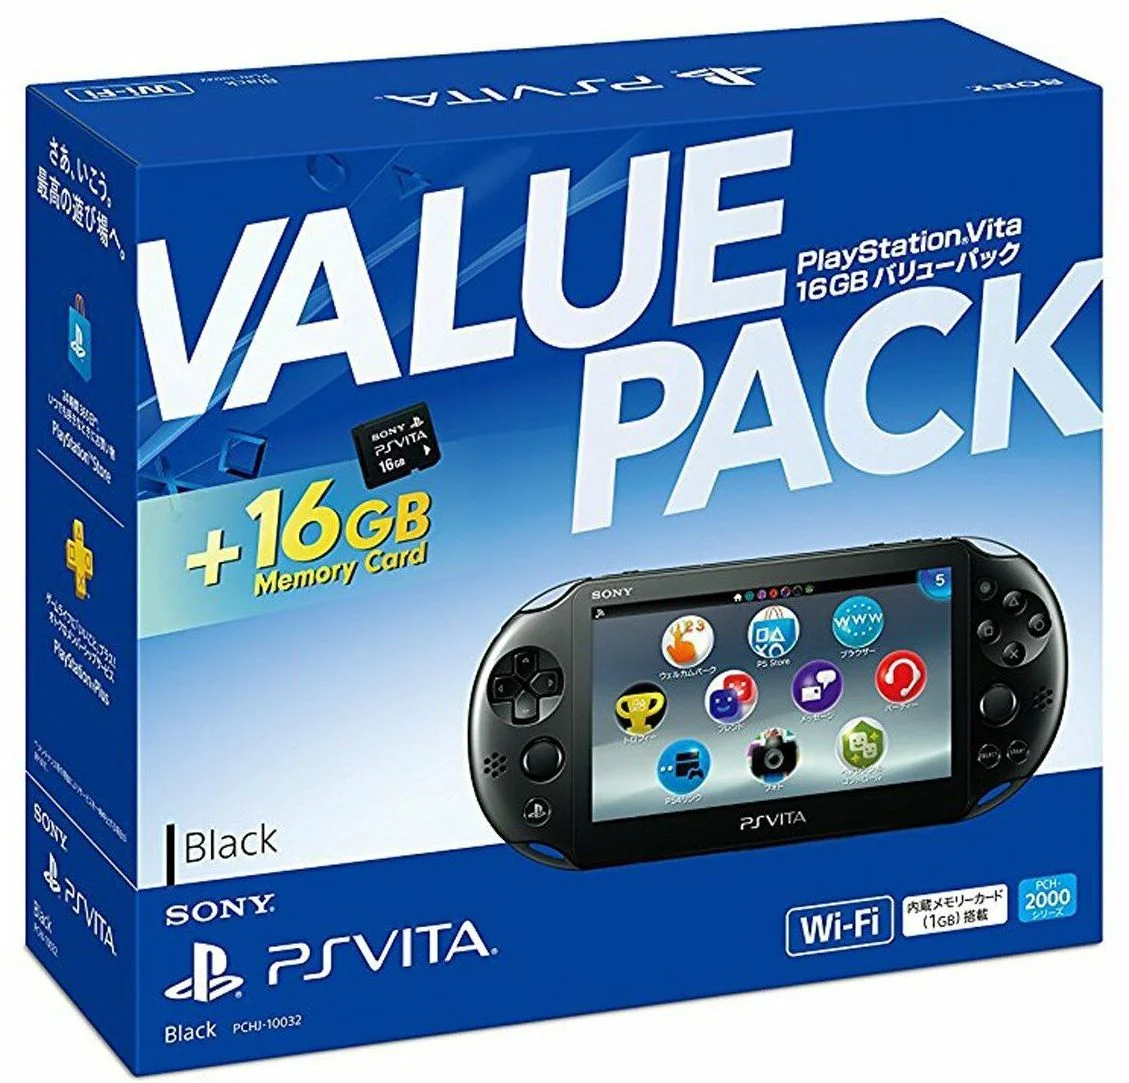  Sony PS Vita Slim Value Pack